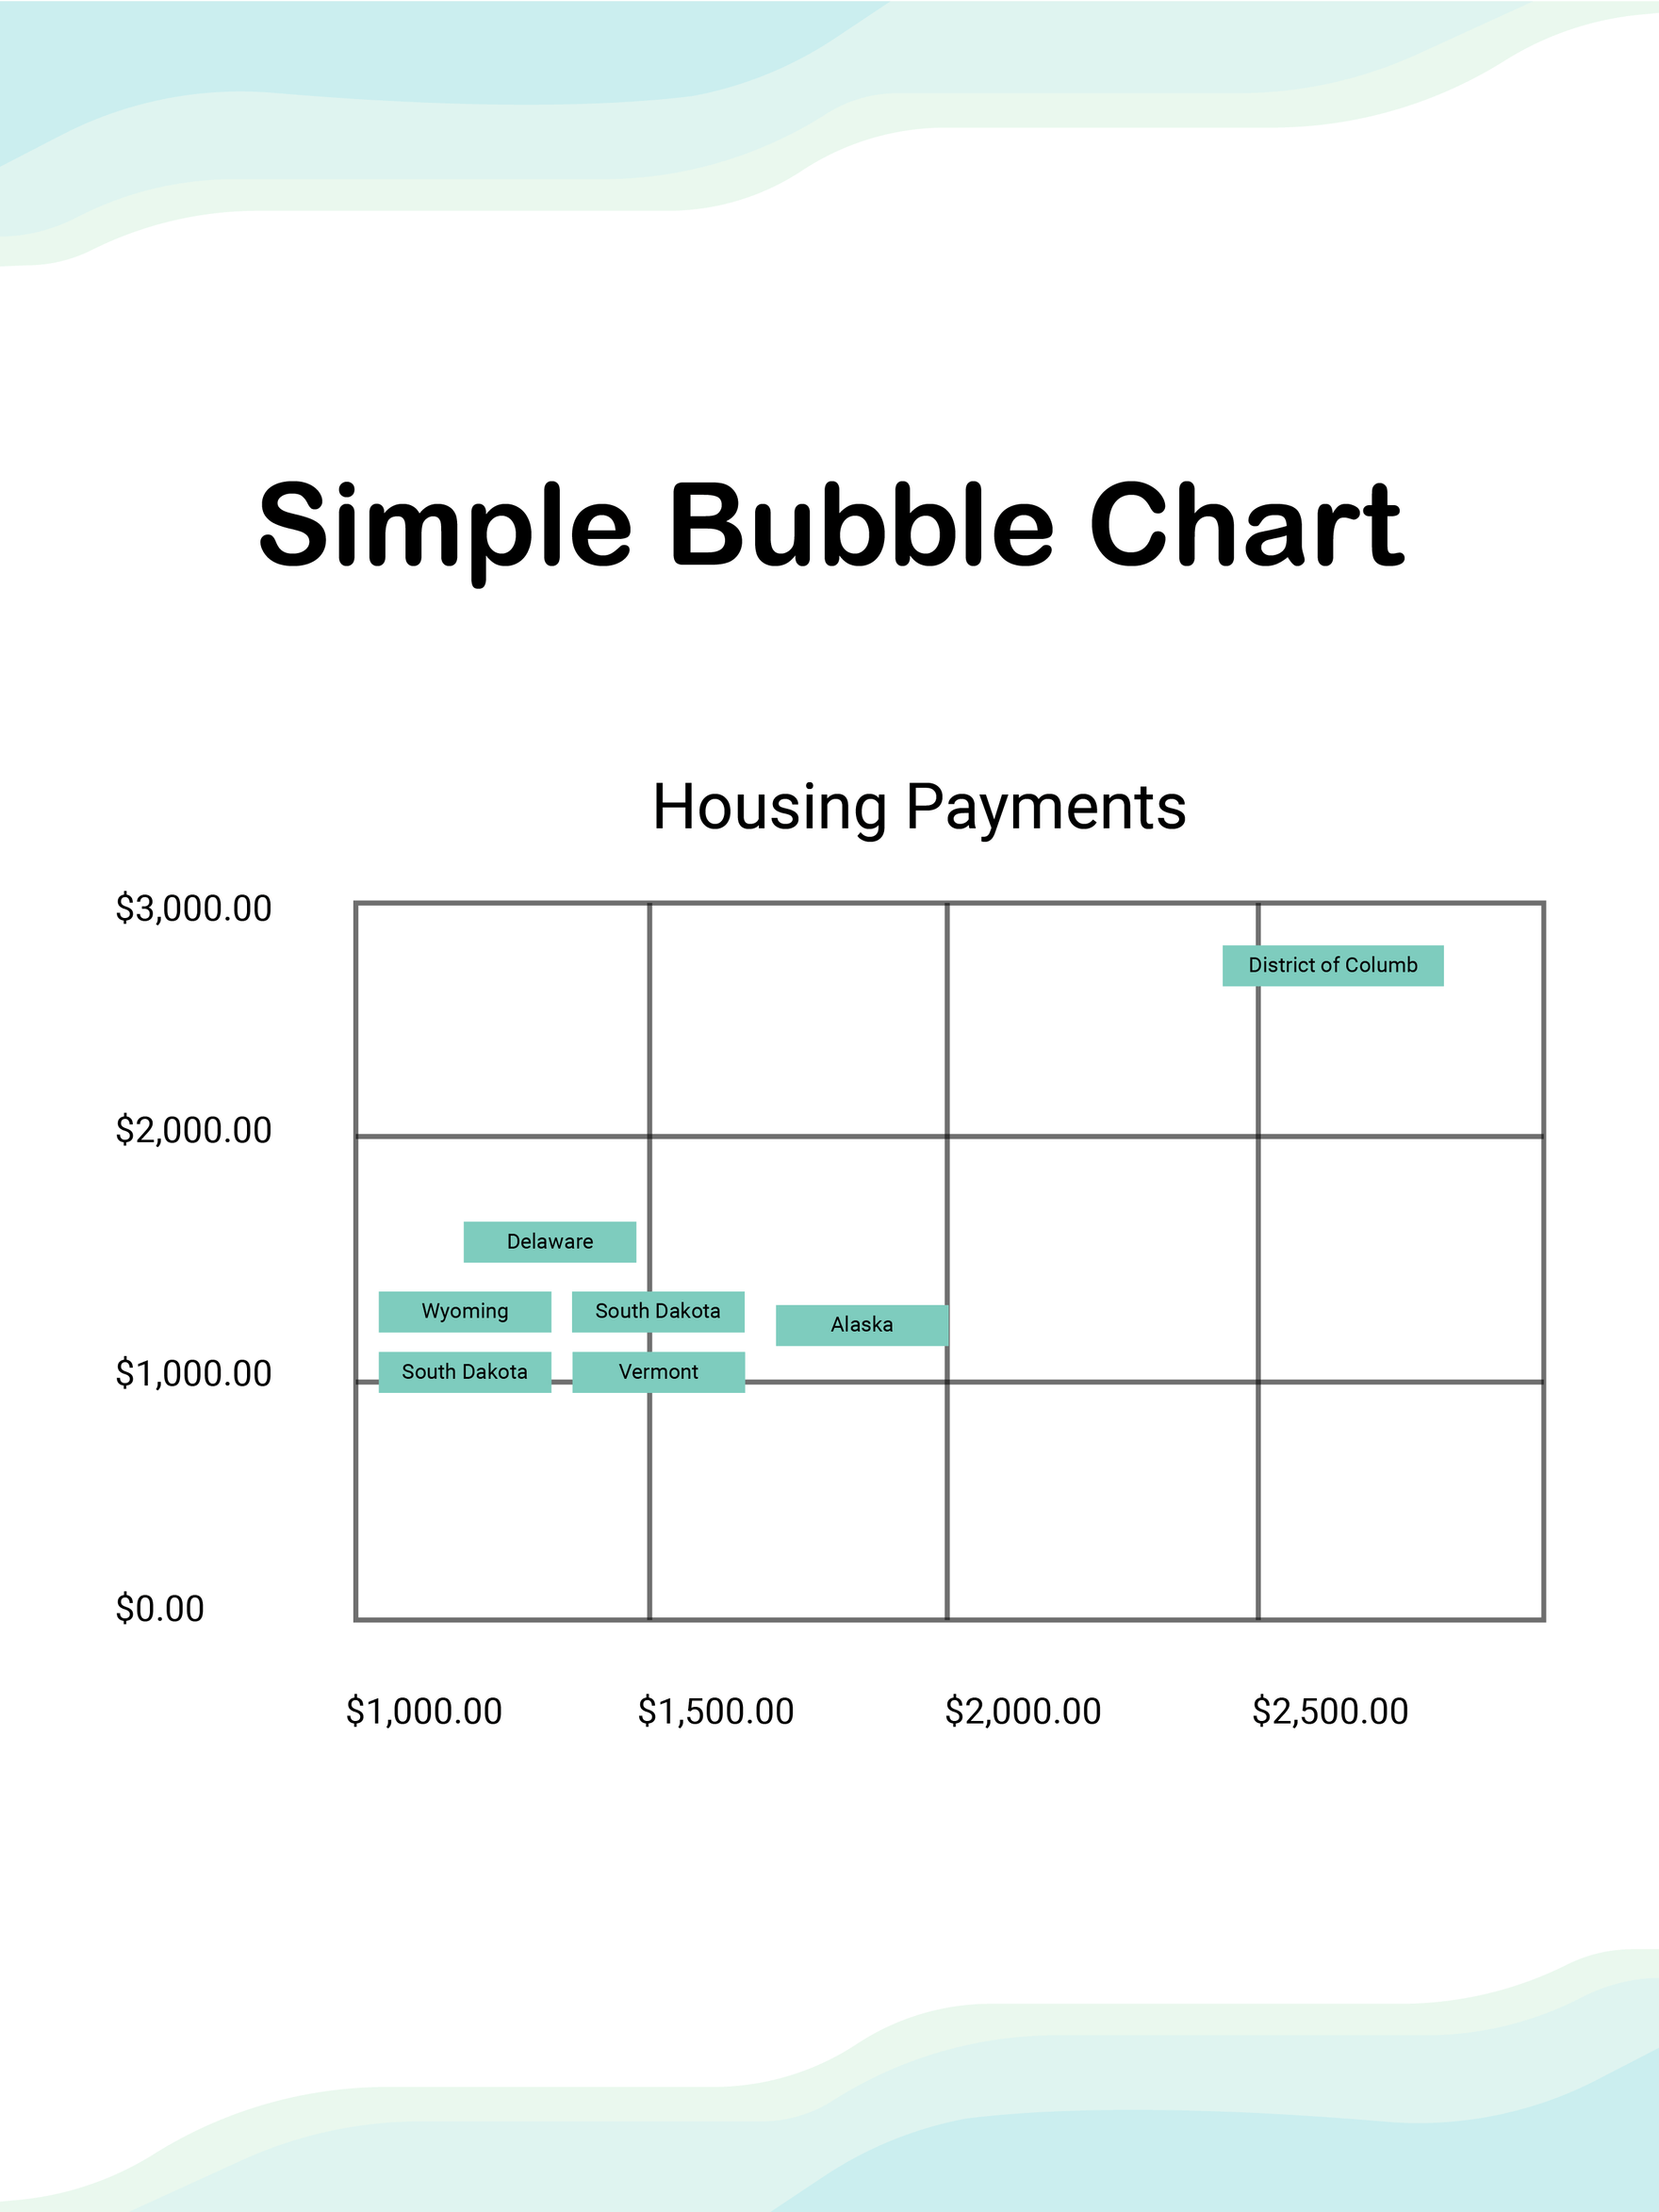 Simple Bubble Chart